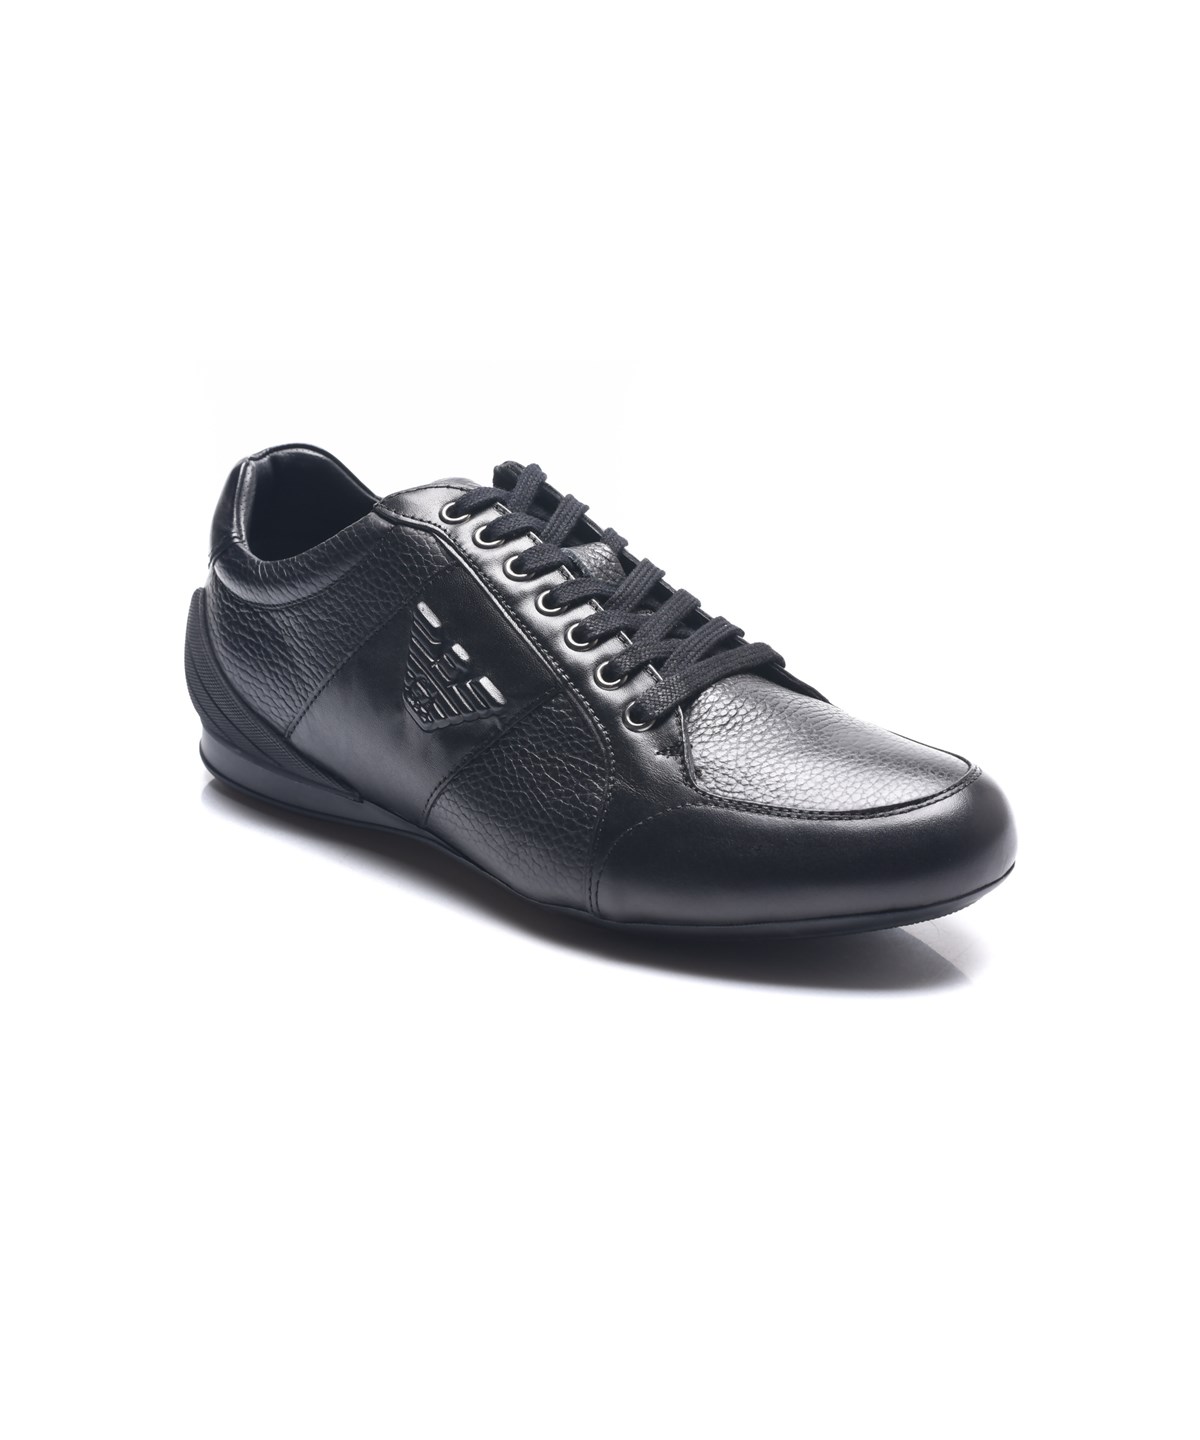 AJF,giorgio armani men's leather shoes,westdenverweather.com